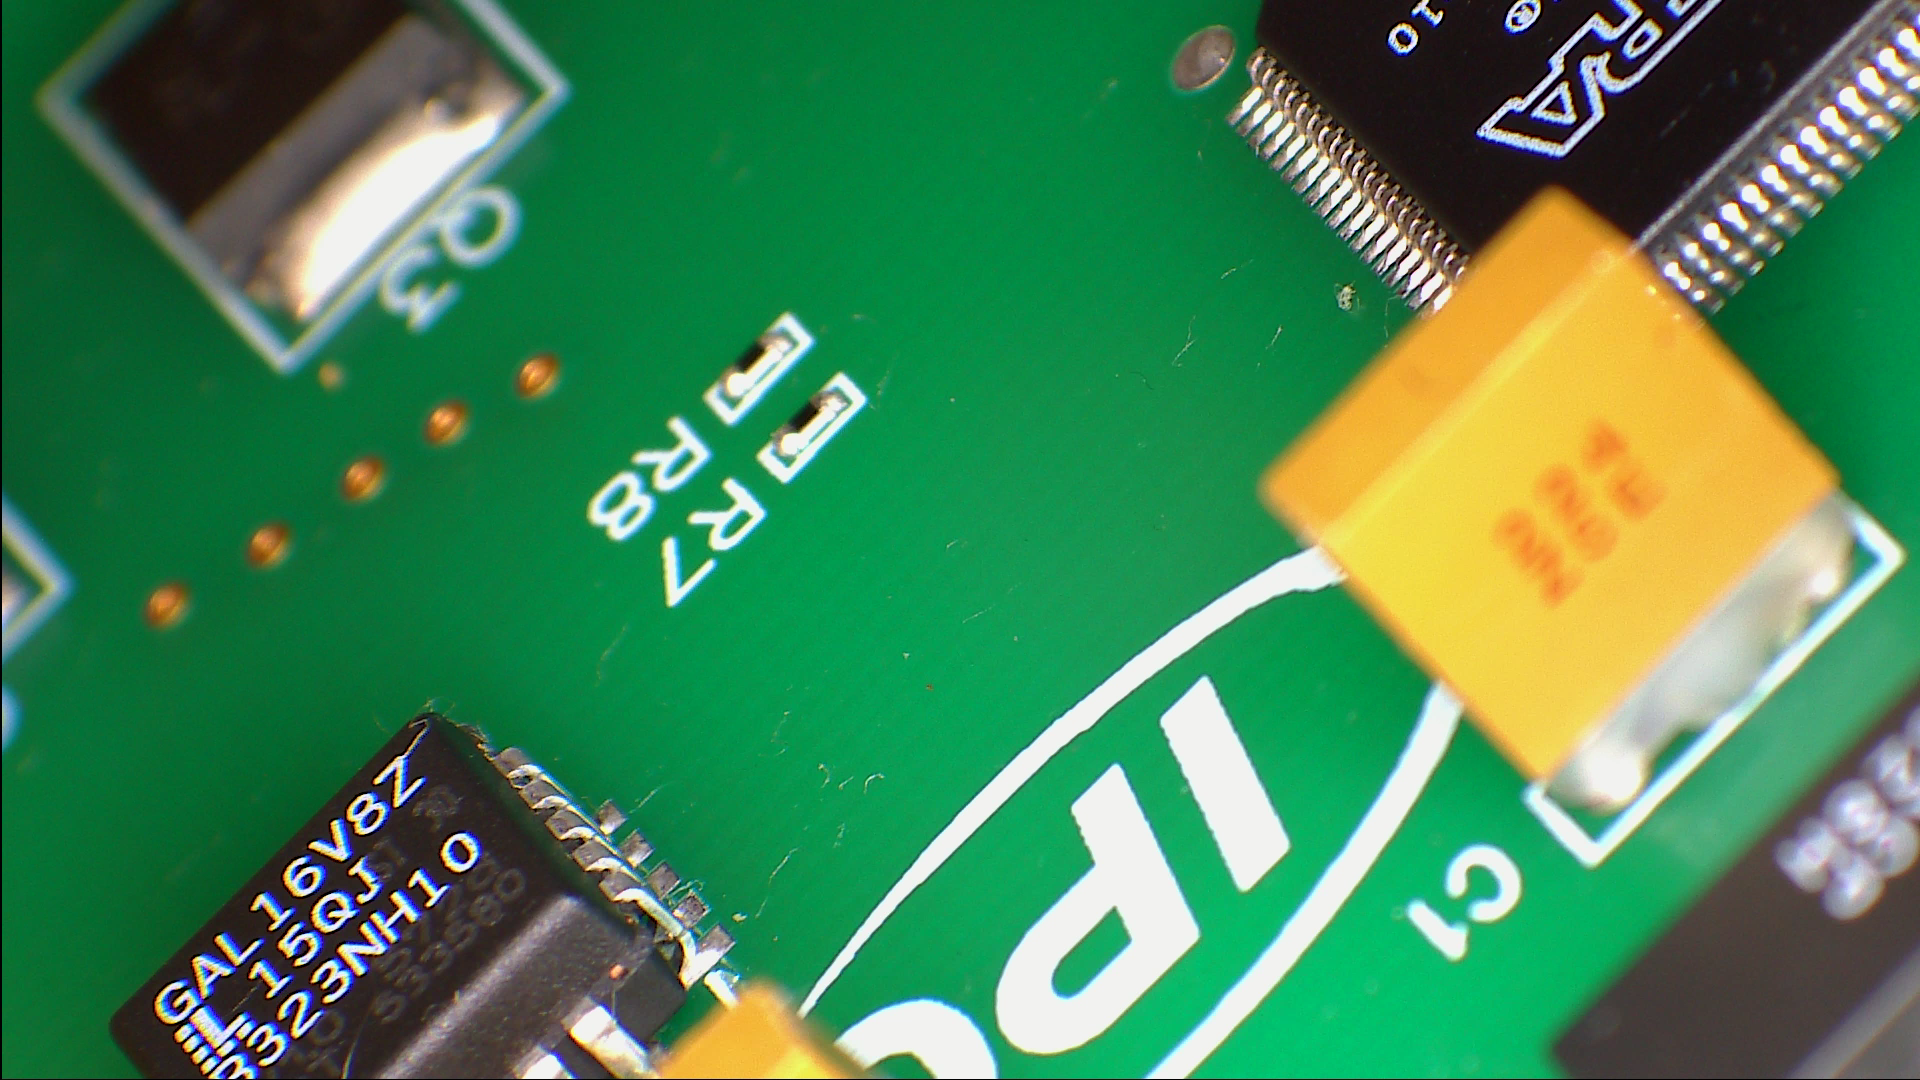 circuit board close-up